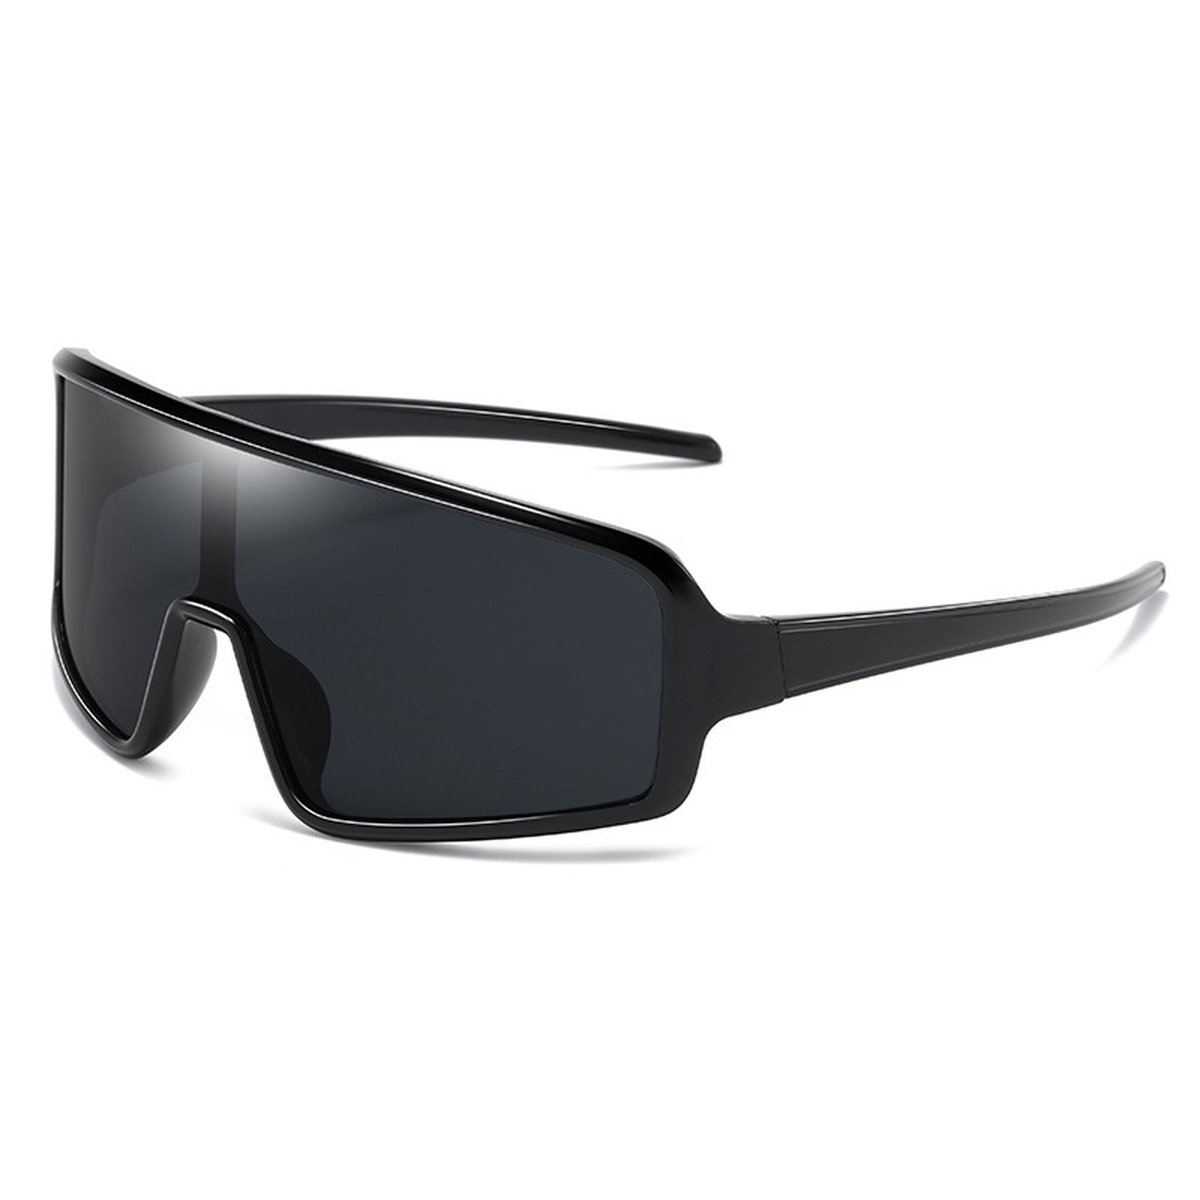 Sport Zonnebril - Zwart - extra groot frame - fietsbril, sportbril